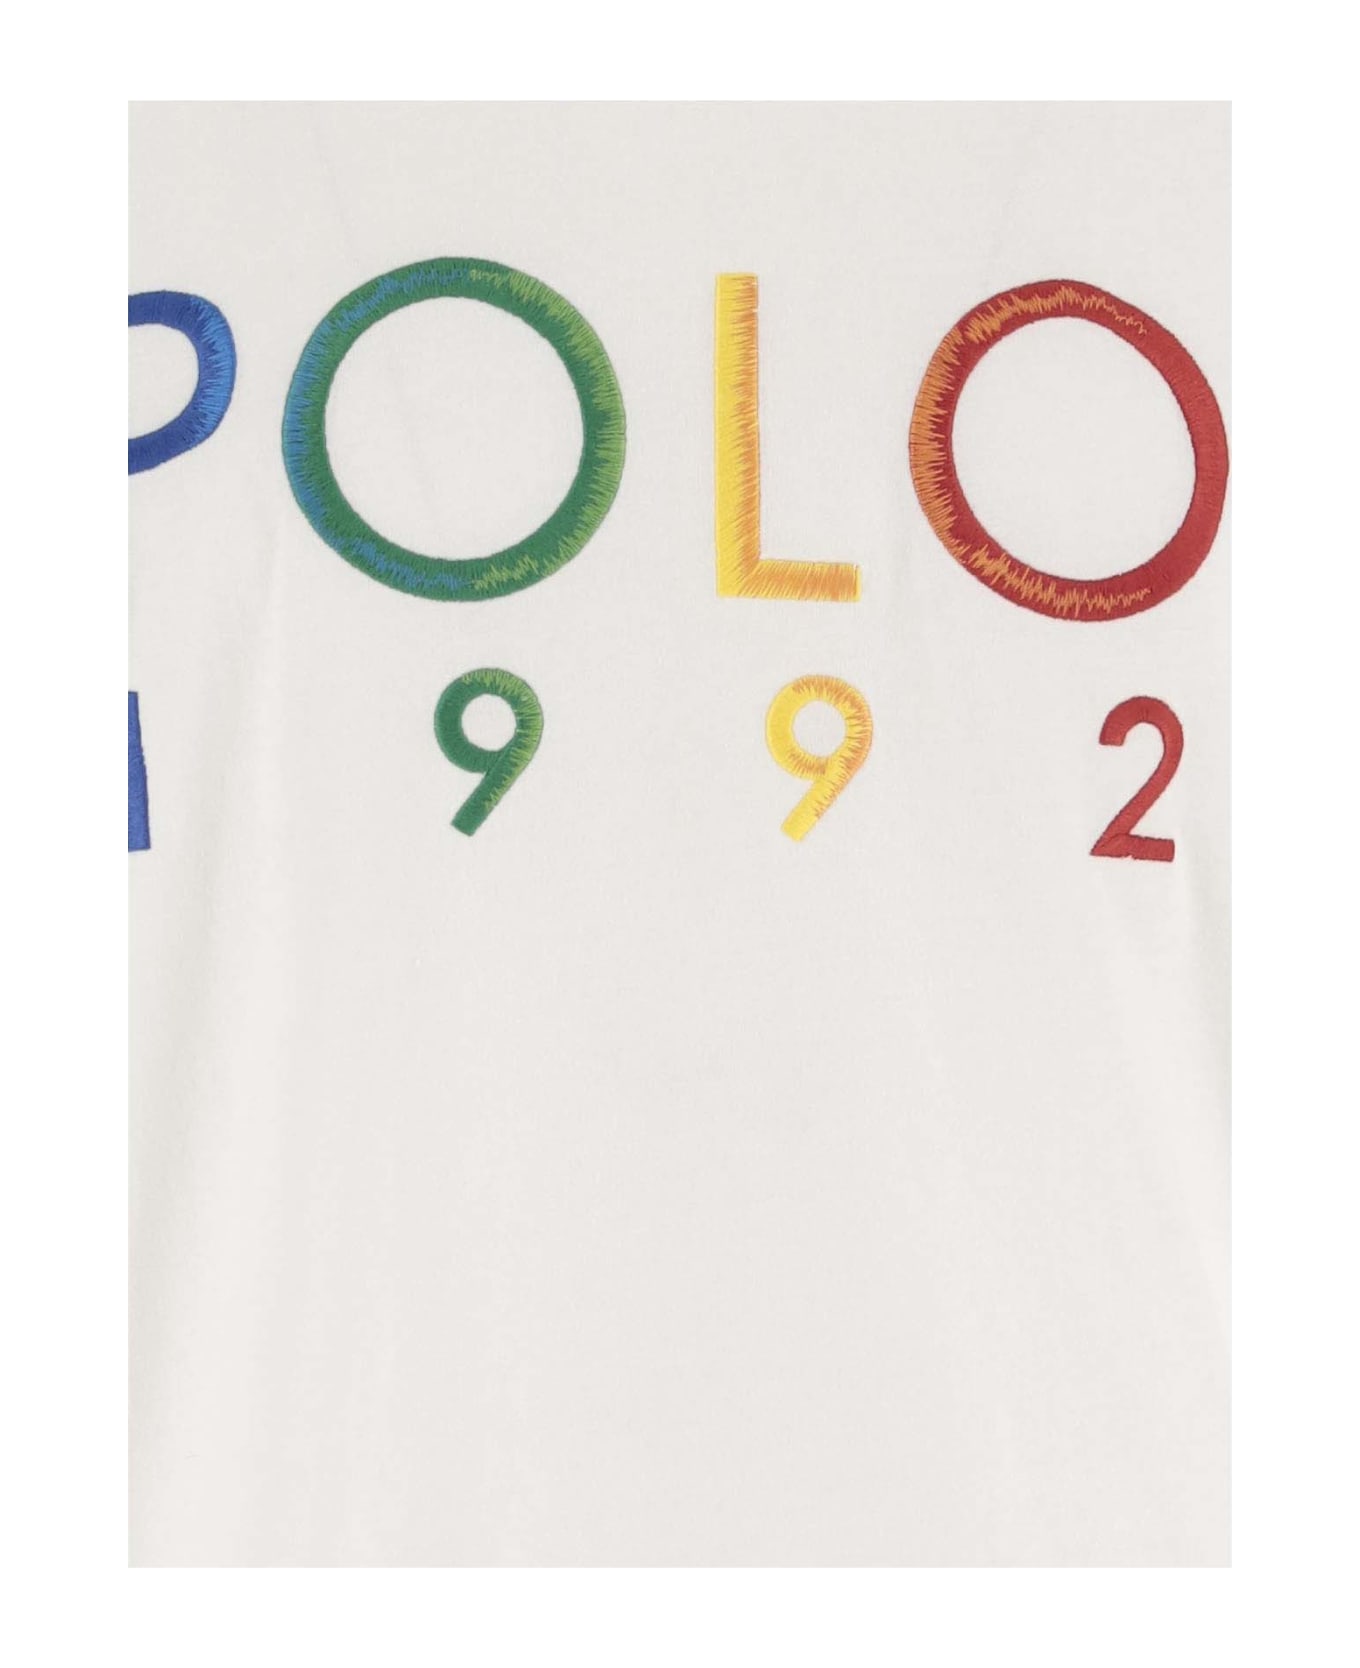 Ralph Lauren Cotton T-shirt With Logo - White